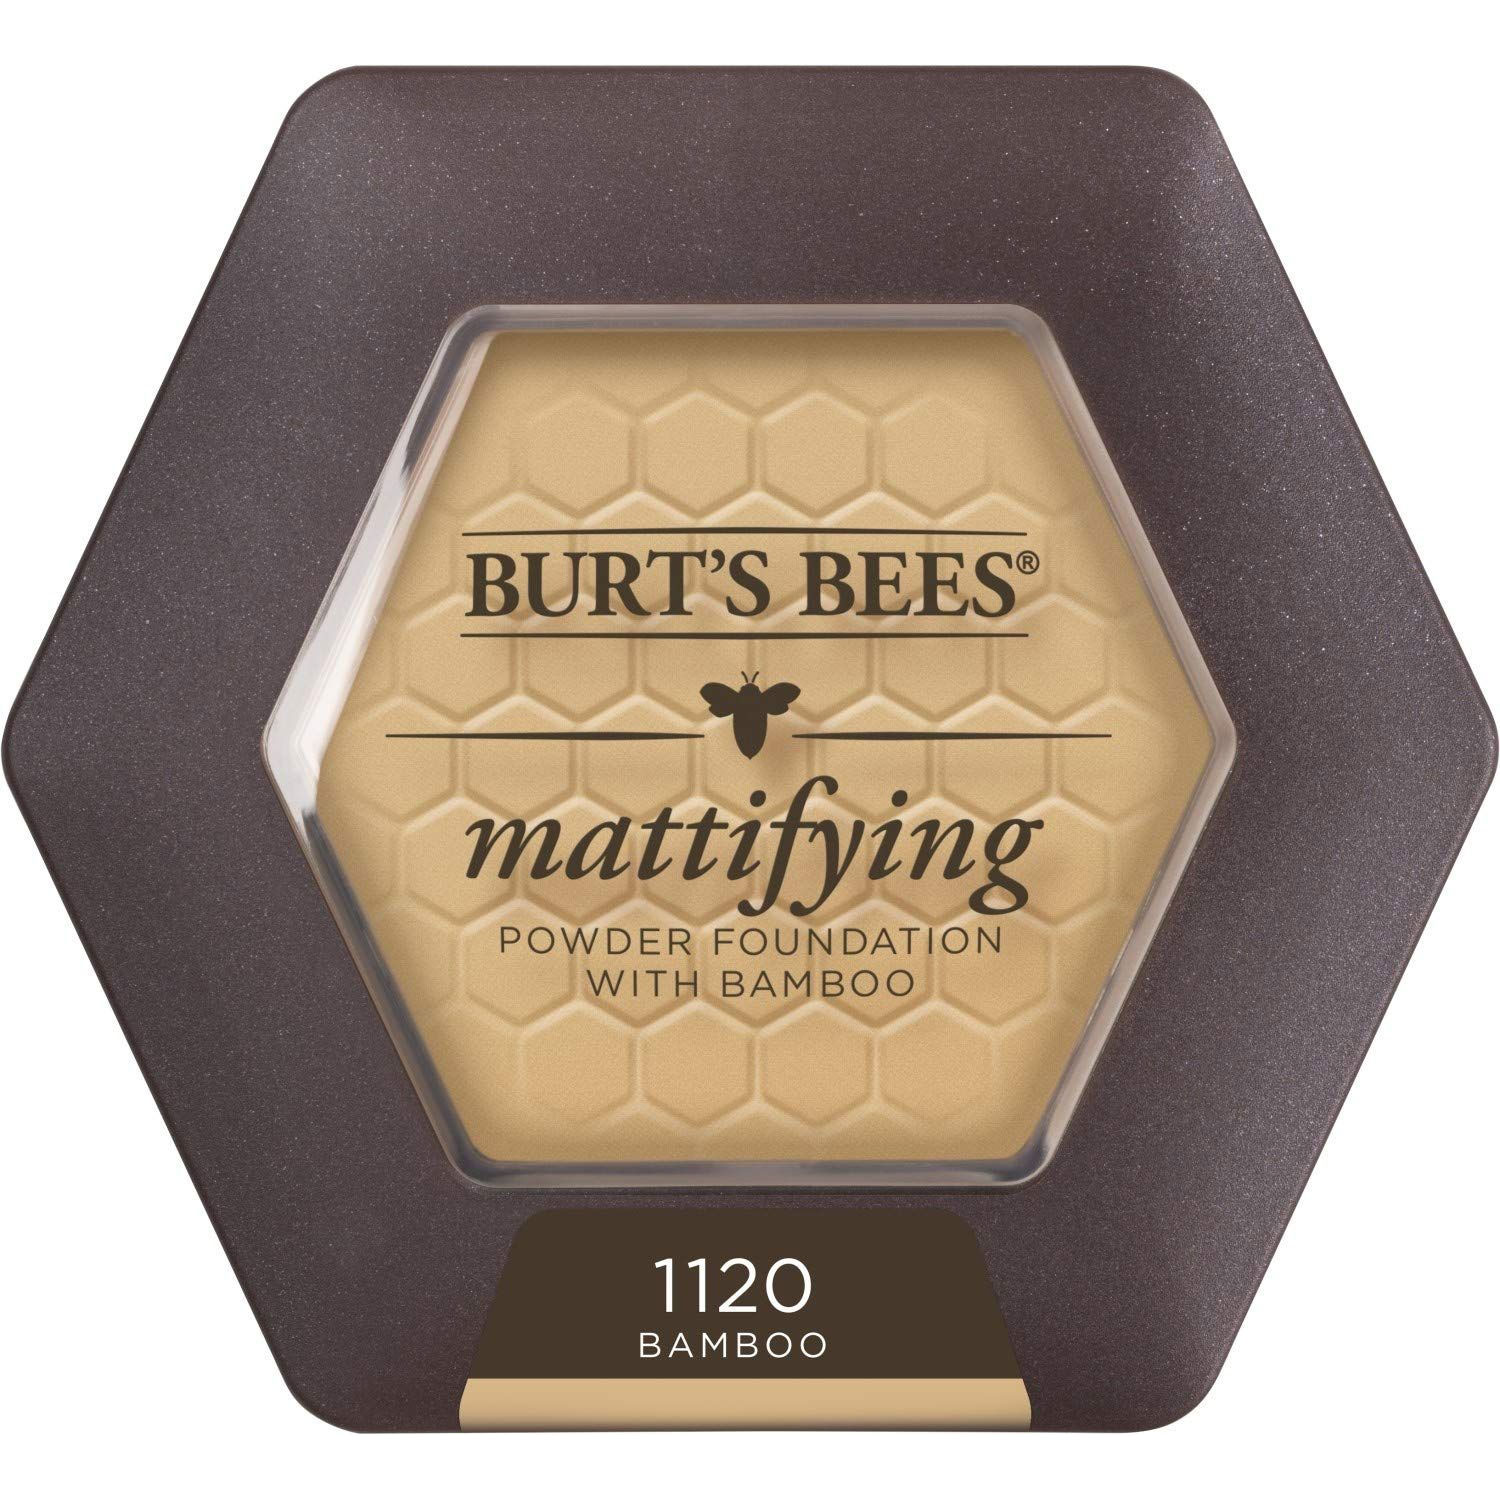 Burt's Bees 100% Natural Origin Mattifying Powder Foundation